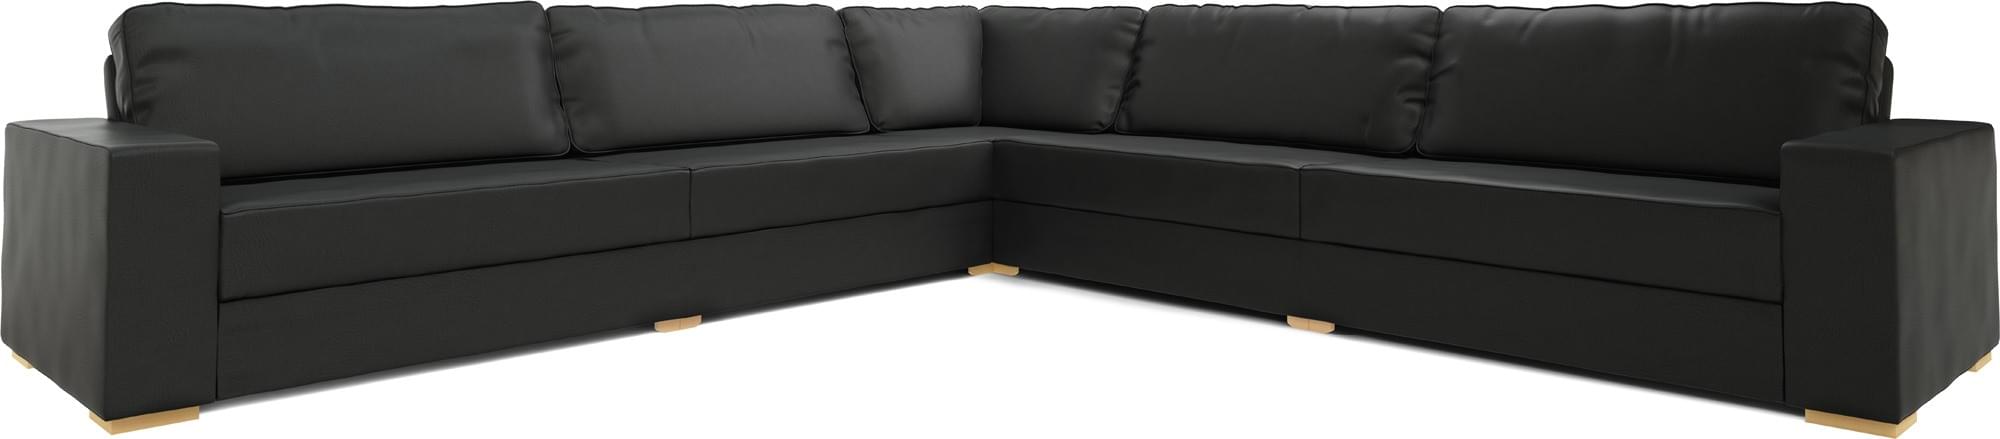 Xia 3X3 Corner Sofa